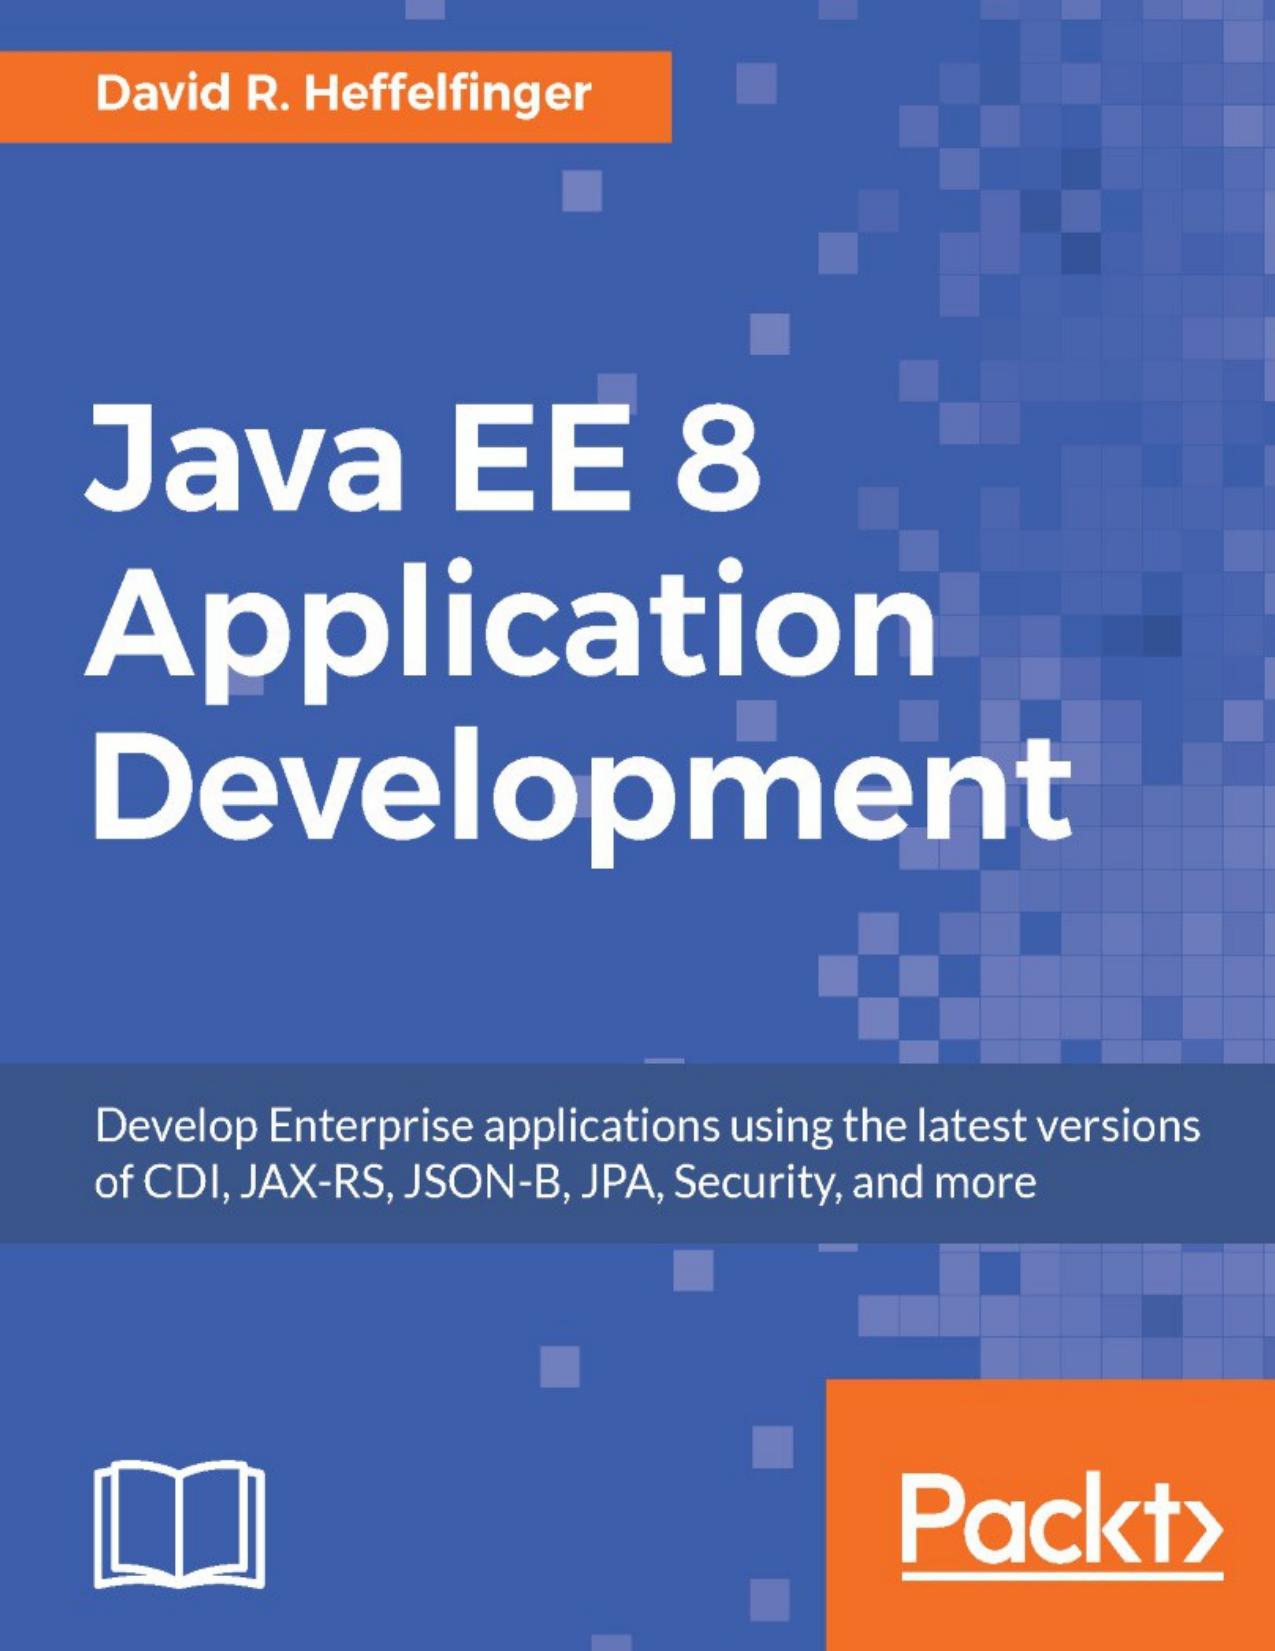 Java EE 8 Application Development by David R. Heffelfinger